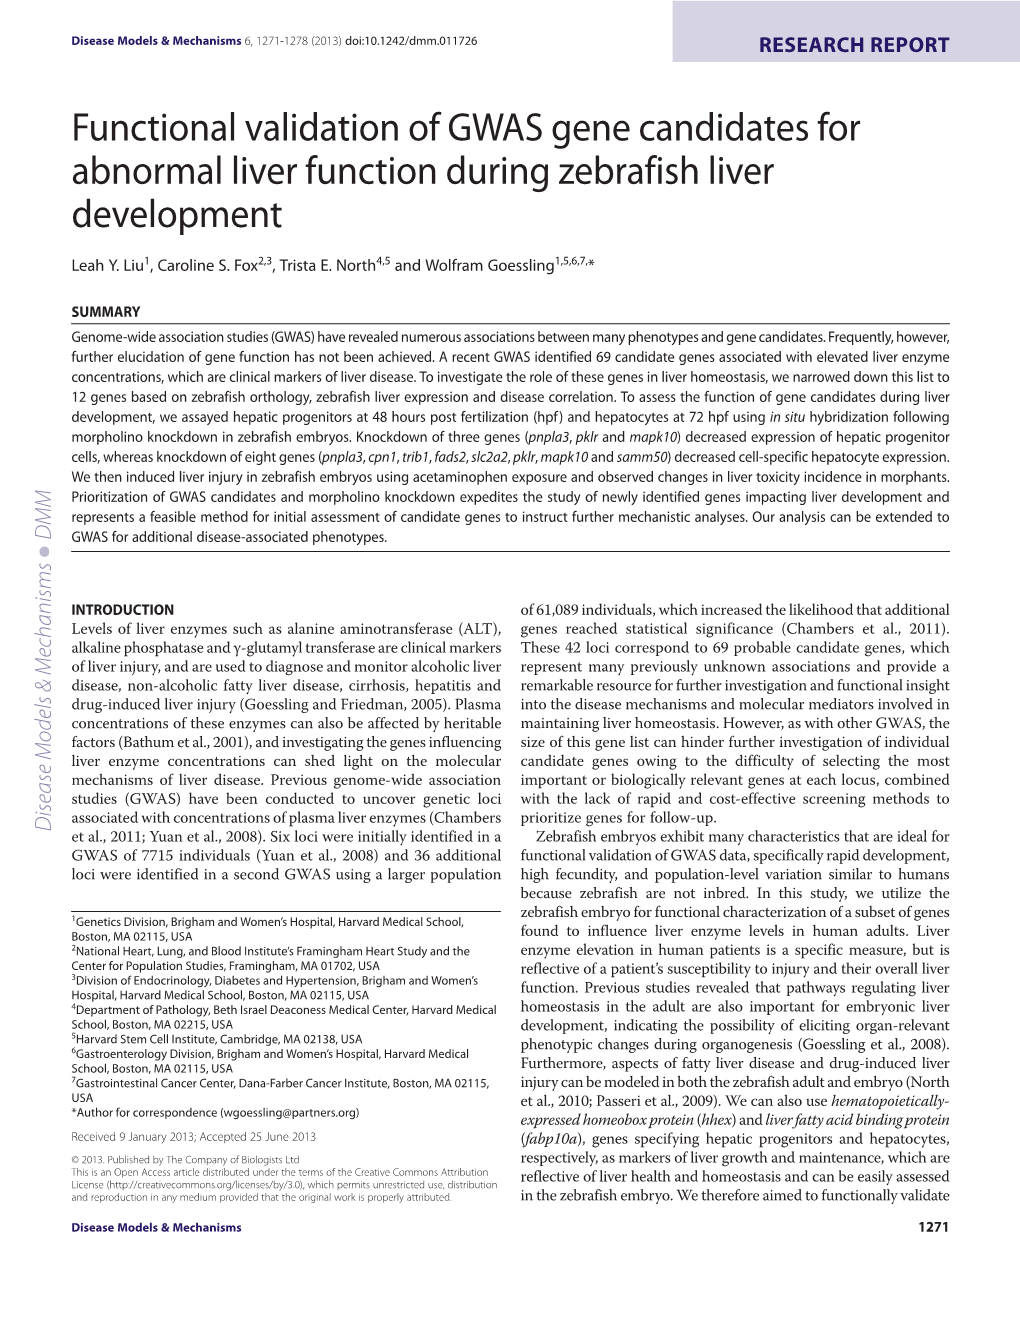 Functional Validation of GWAS Gene Candidates for Abnormal Liver Function During Zebrafish Liver Development